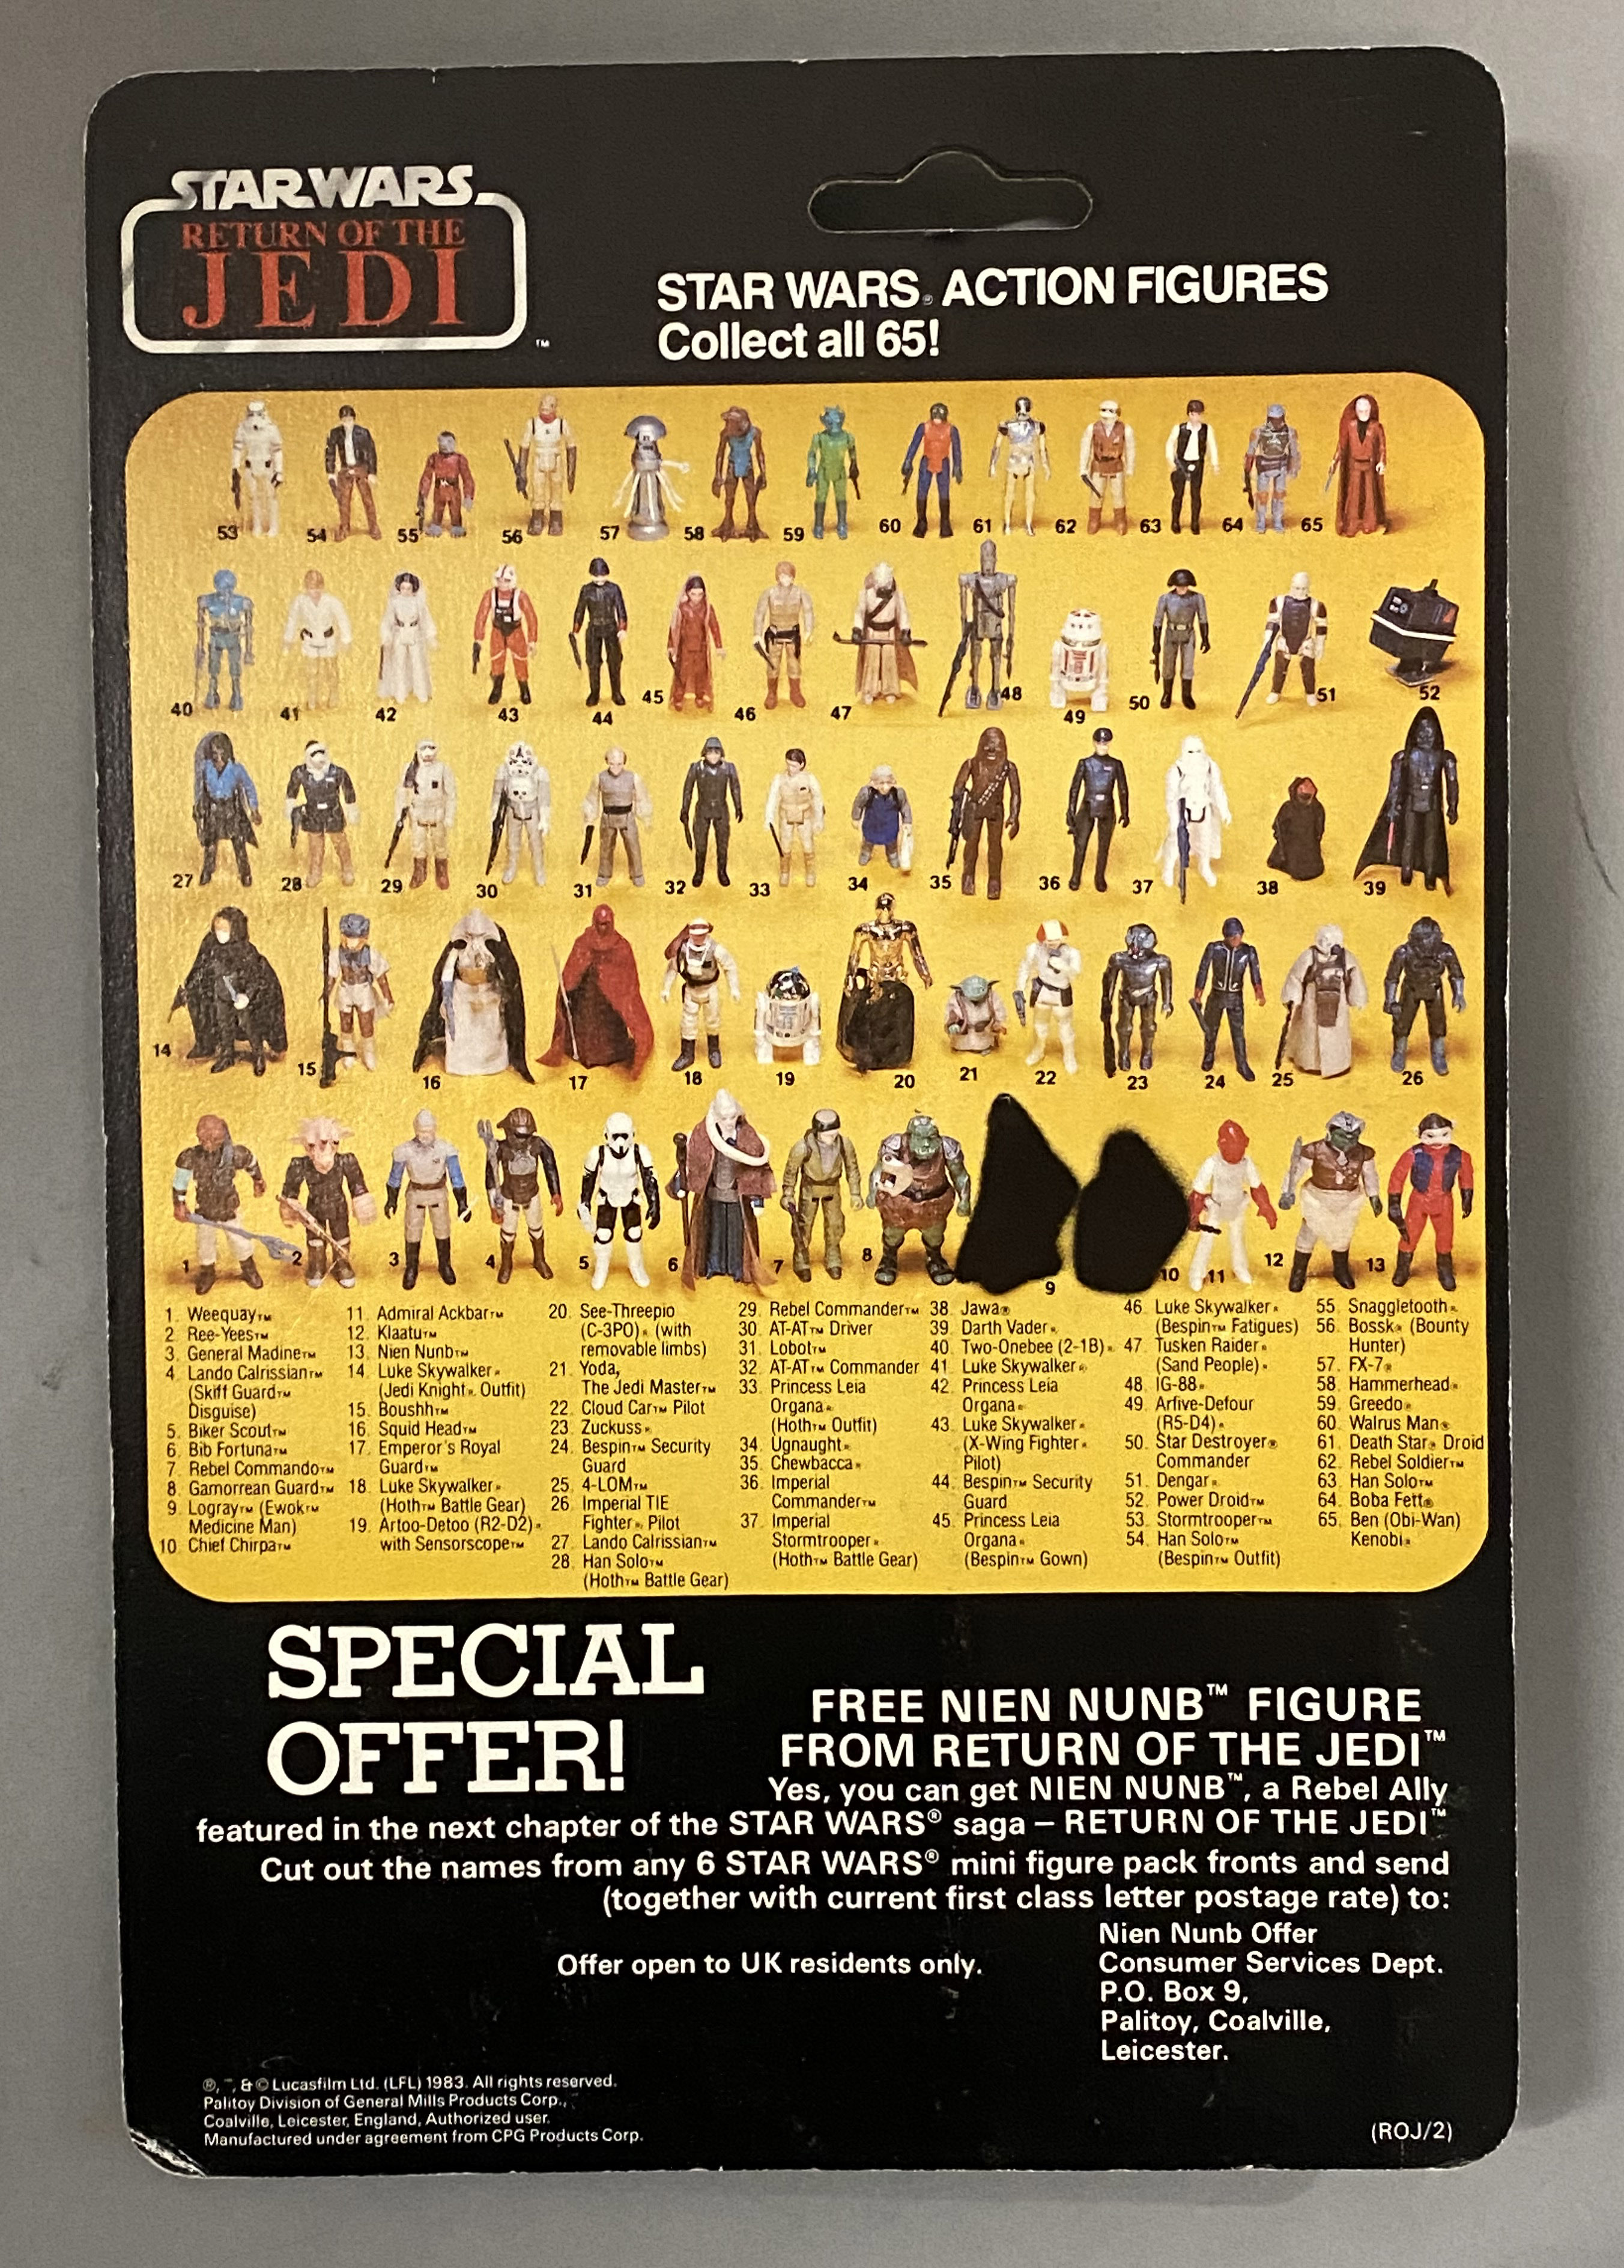 5 vintage Star Wars ROTJ Return Of The Jedi figures on original backing cards: Arfive-Defour (R5-D4) - Image 5 of 12